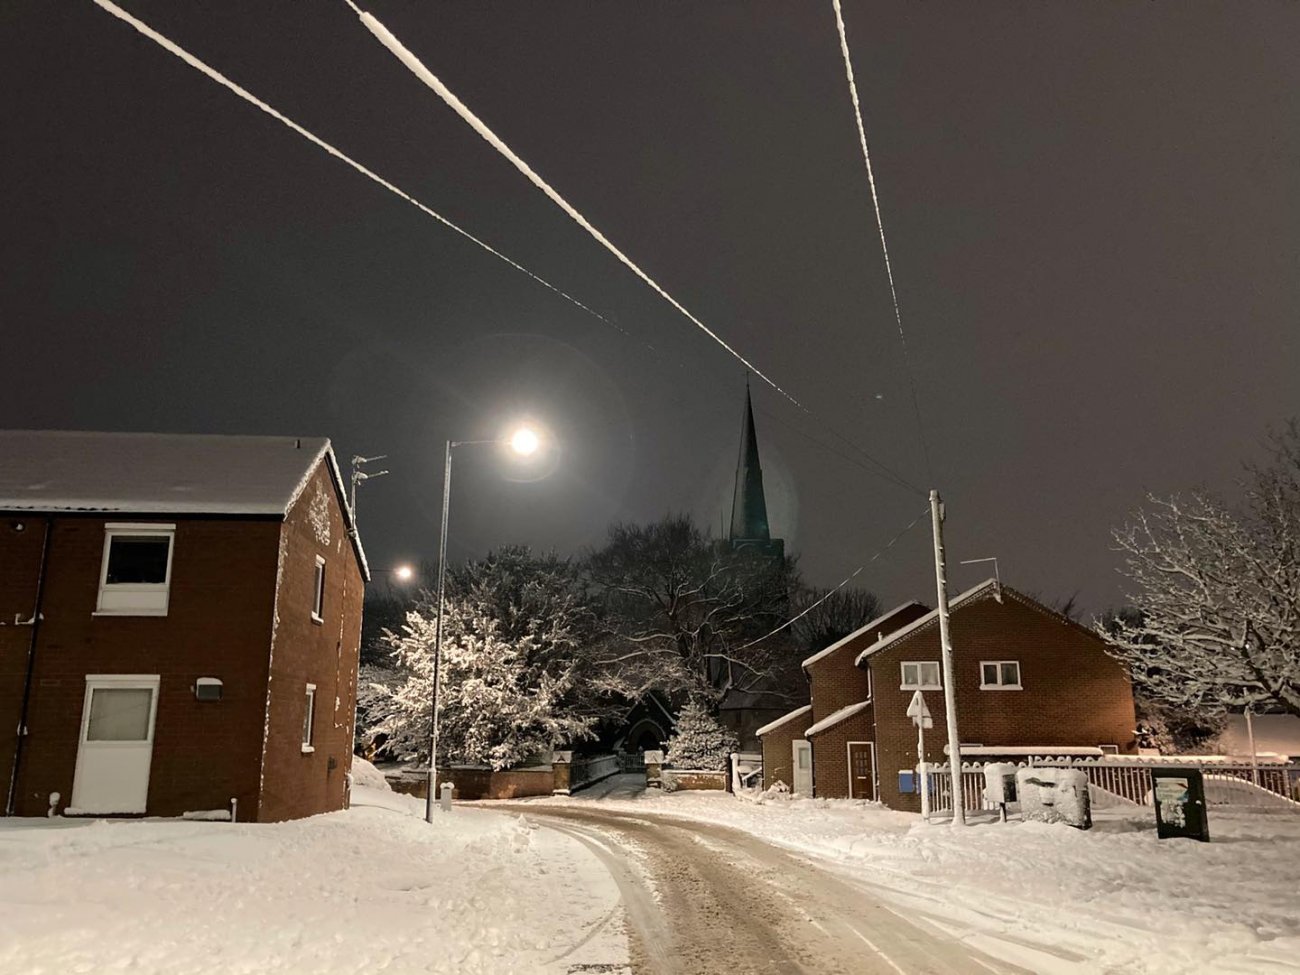 Photograph of Snowy Spondon Nights - Church Street and St Werburgh's